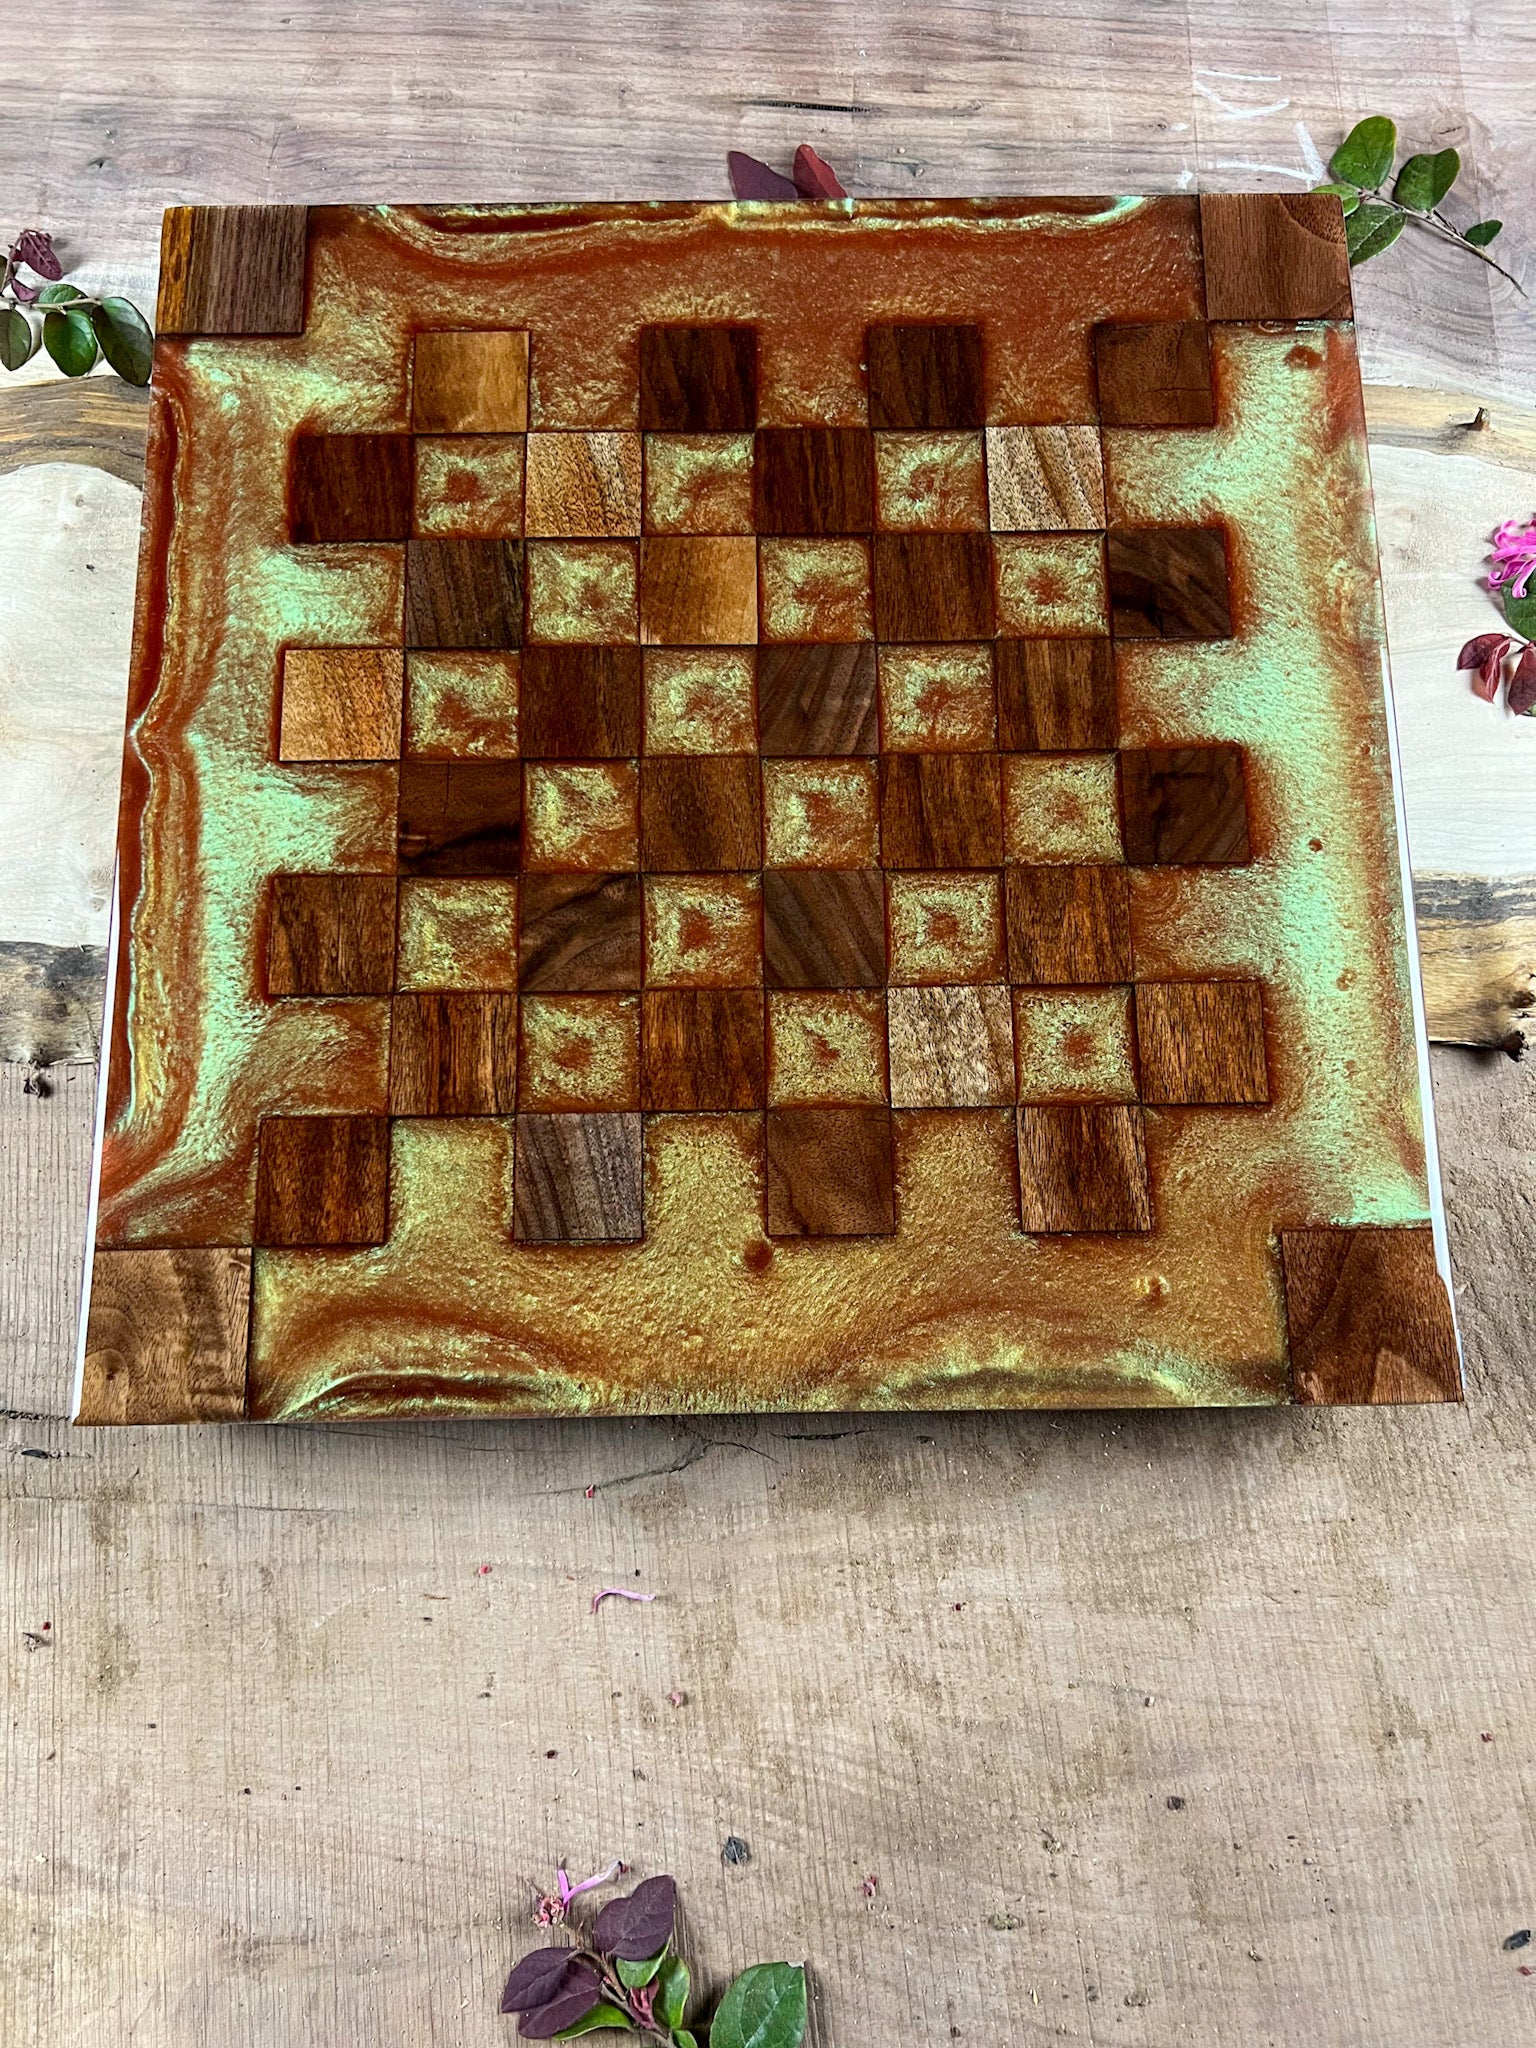 Calypso Walnut Chess Board (Chameleon Color Shifting)